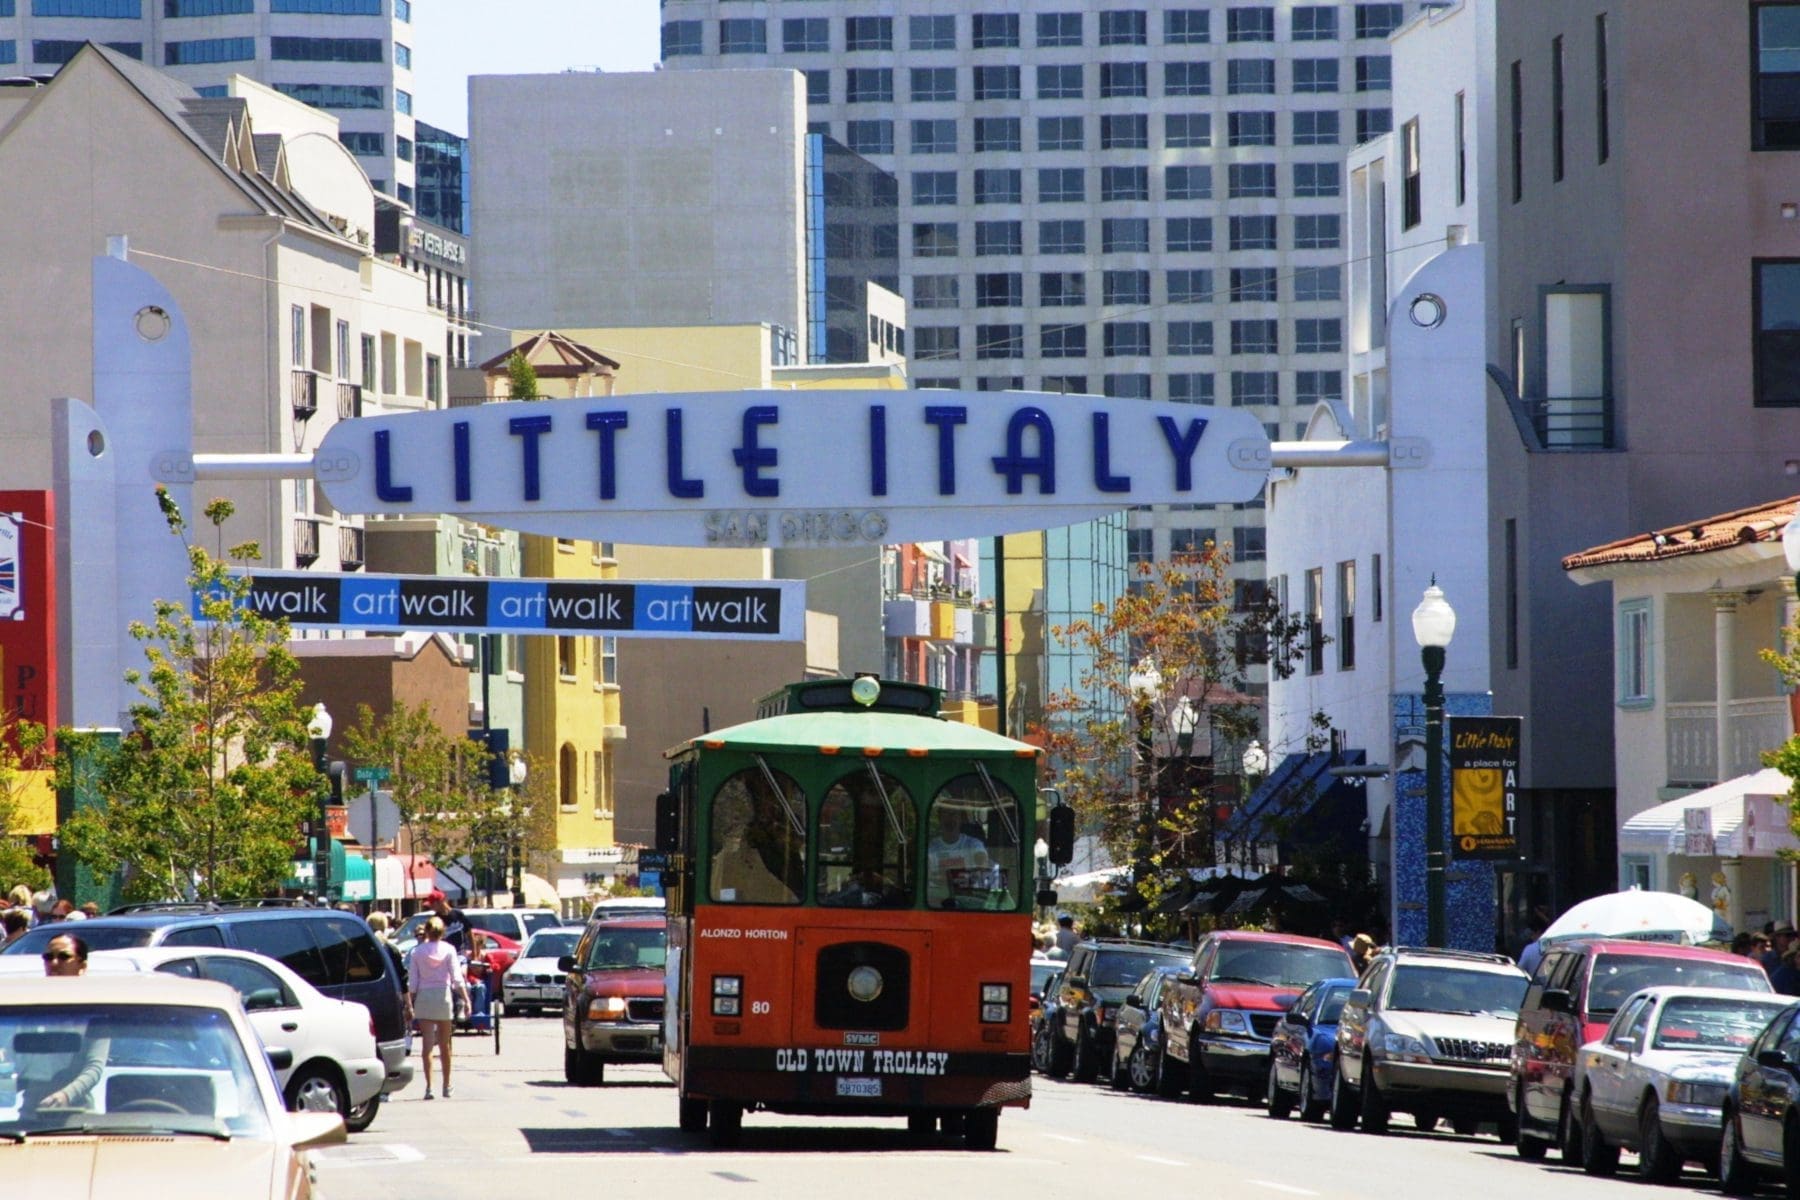 Downtown Little Italy Trolley -Courtesy Joanne DiBona SanDiego.org